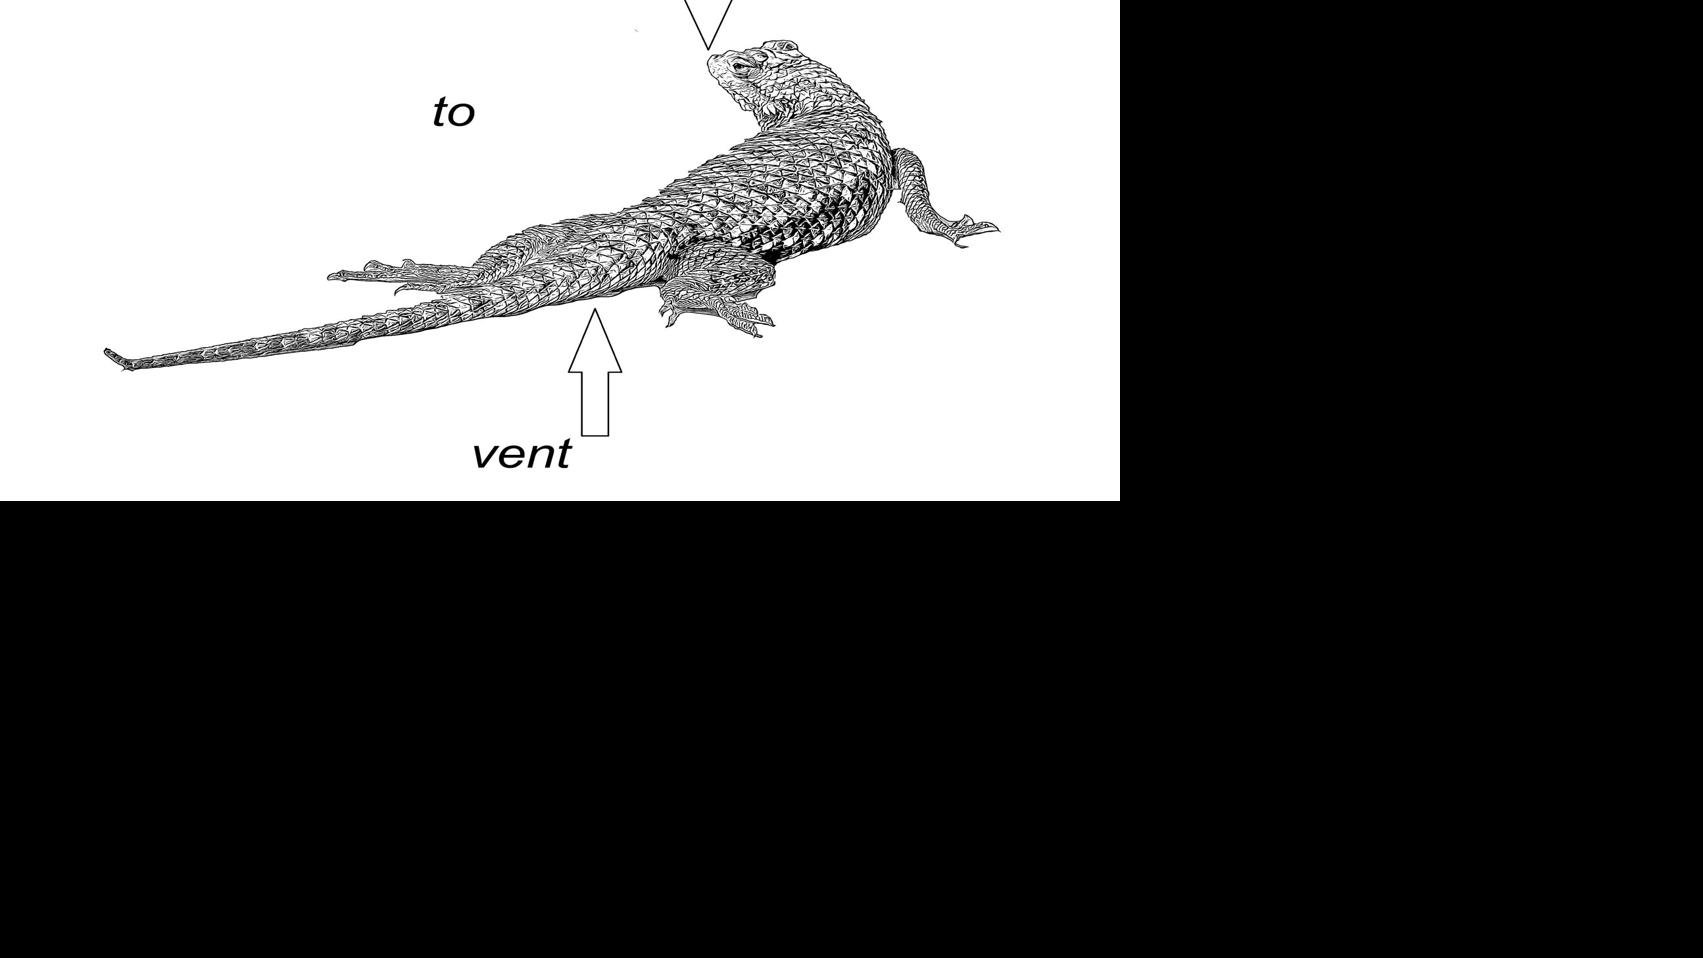 lizard diagram